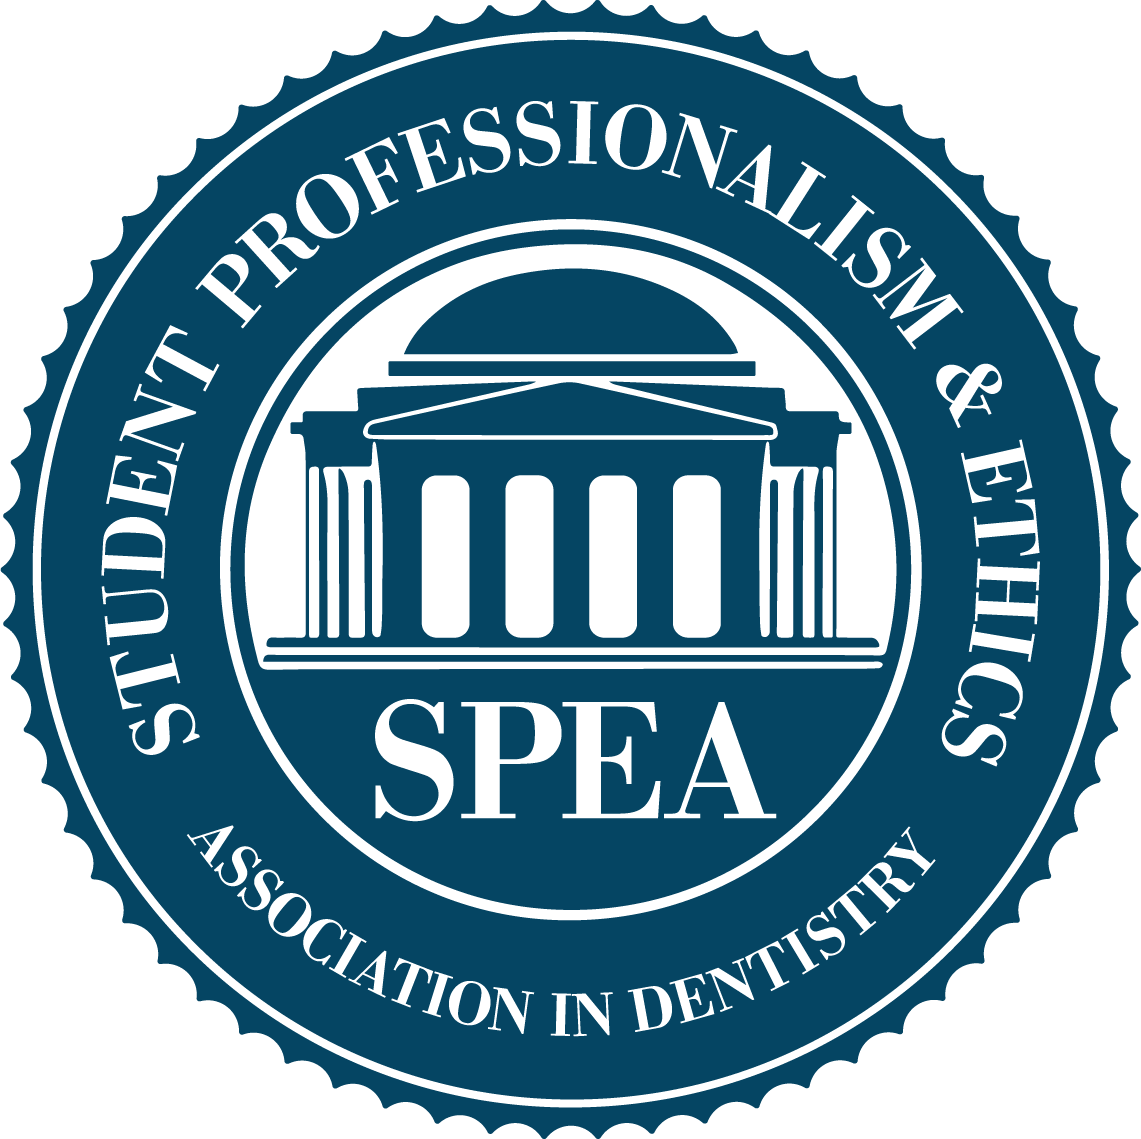 Student Professionalism & Ethics Association